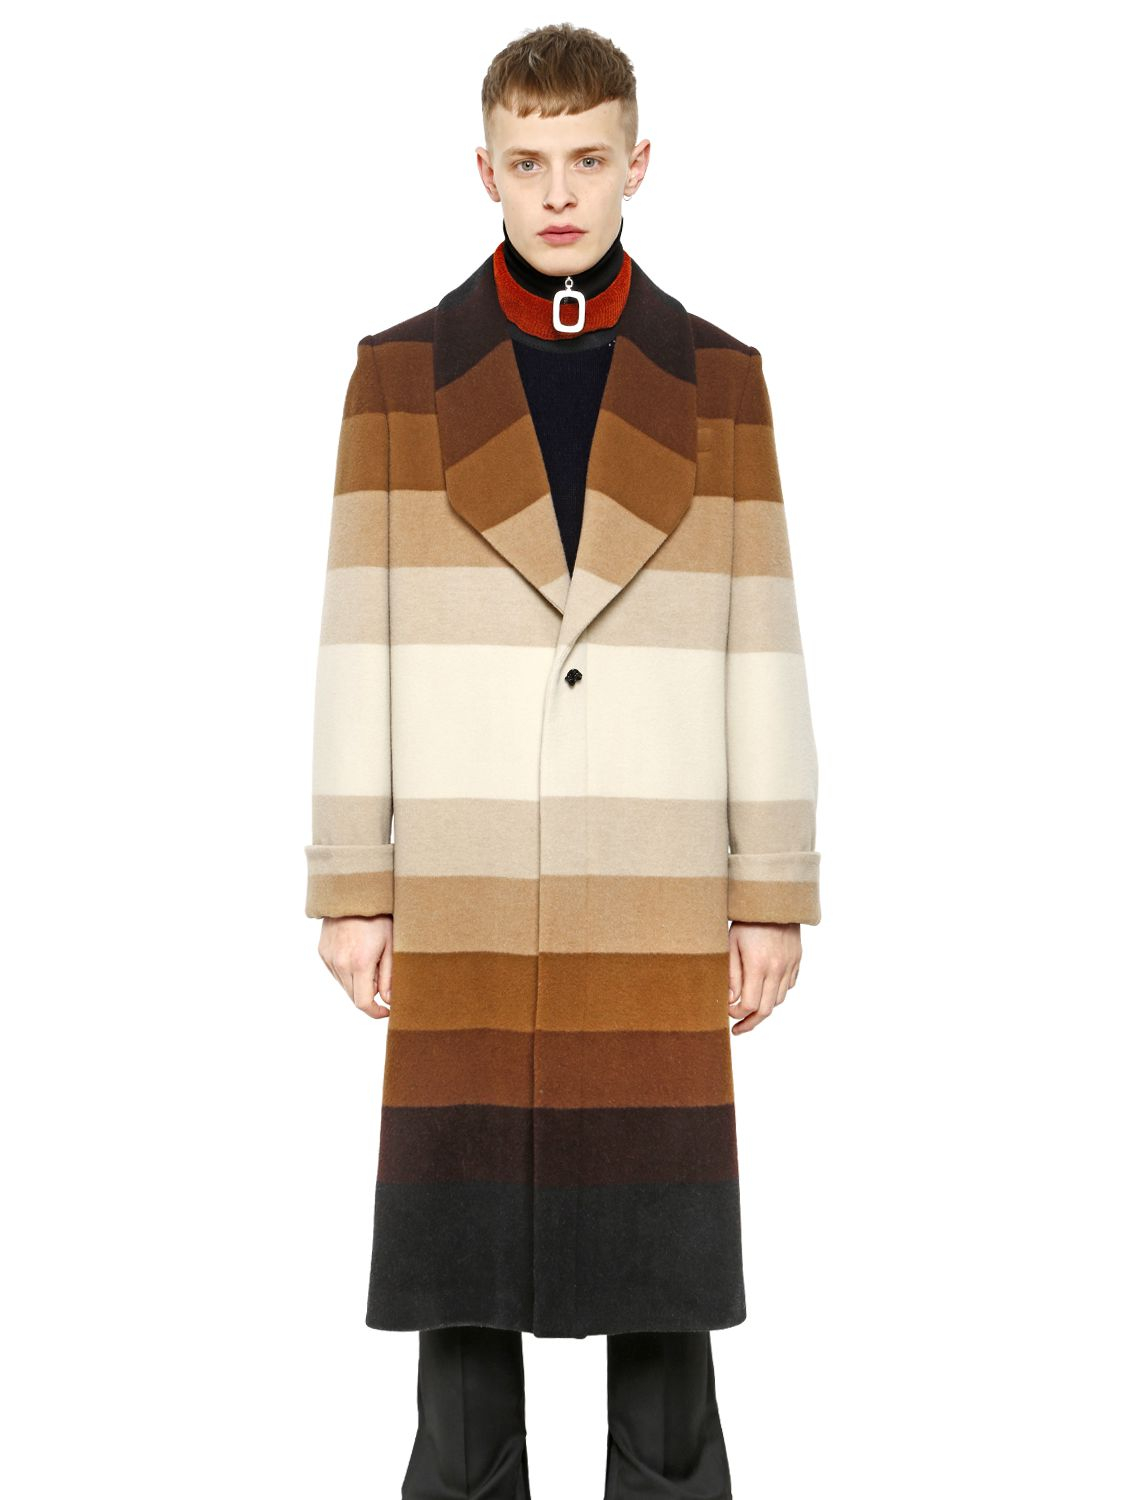 JW Anderson Oversized Gradient Wool Coat in Brown - Lyst